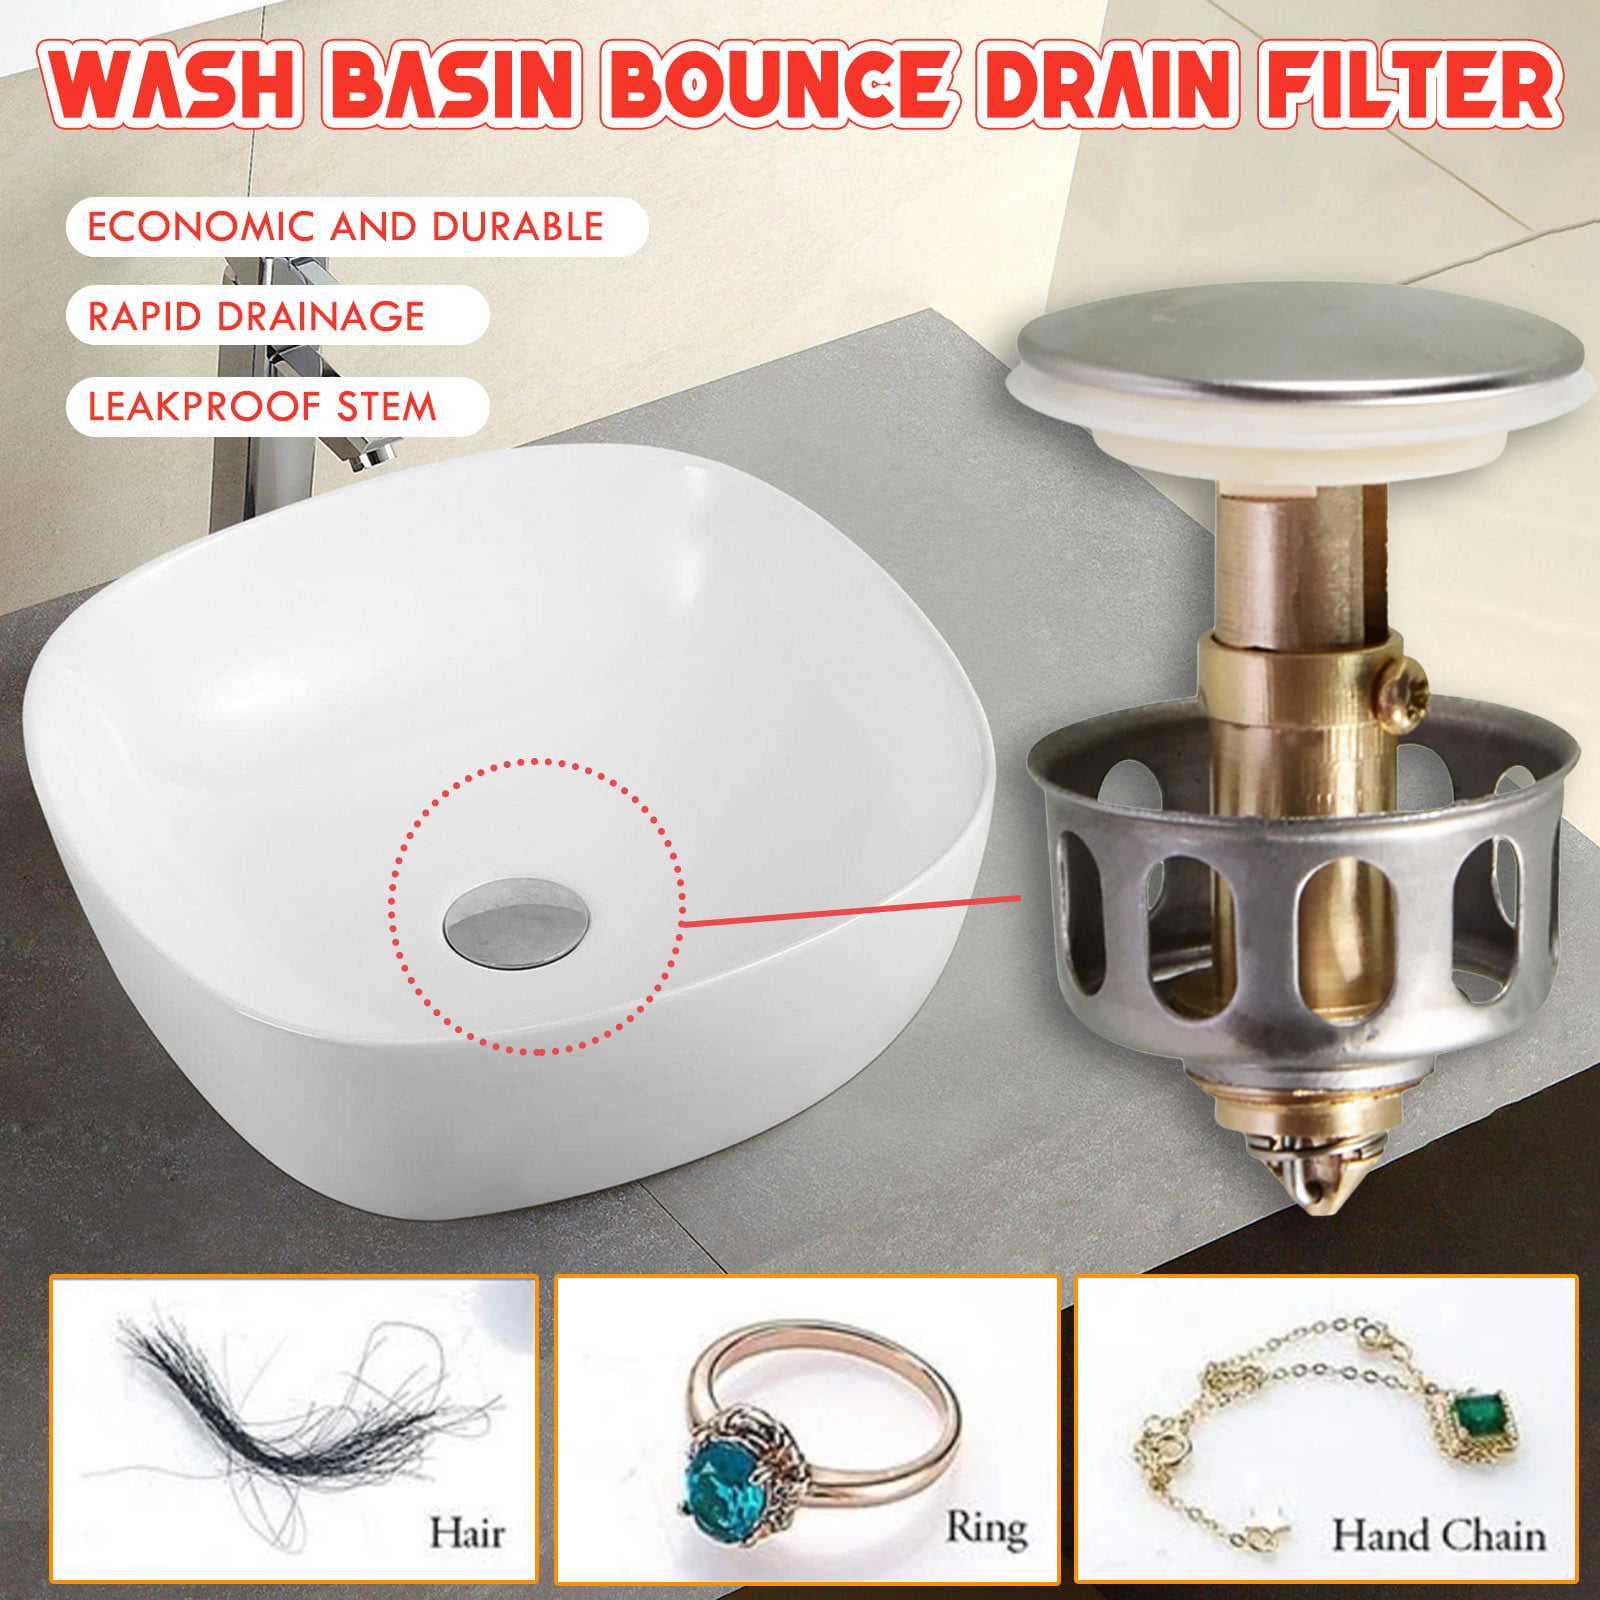 Wash Basin Bounce Core Drain Filter Pop Up Toilet Bathroom Sink Stopper Hot 